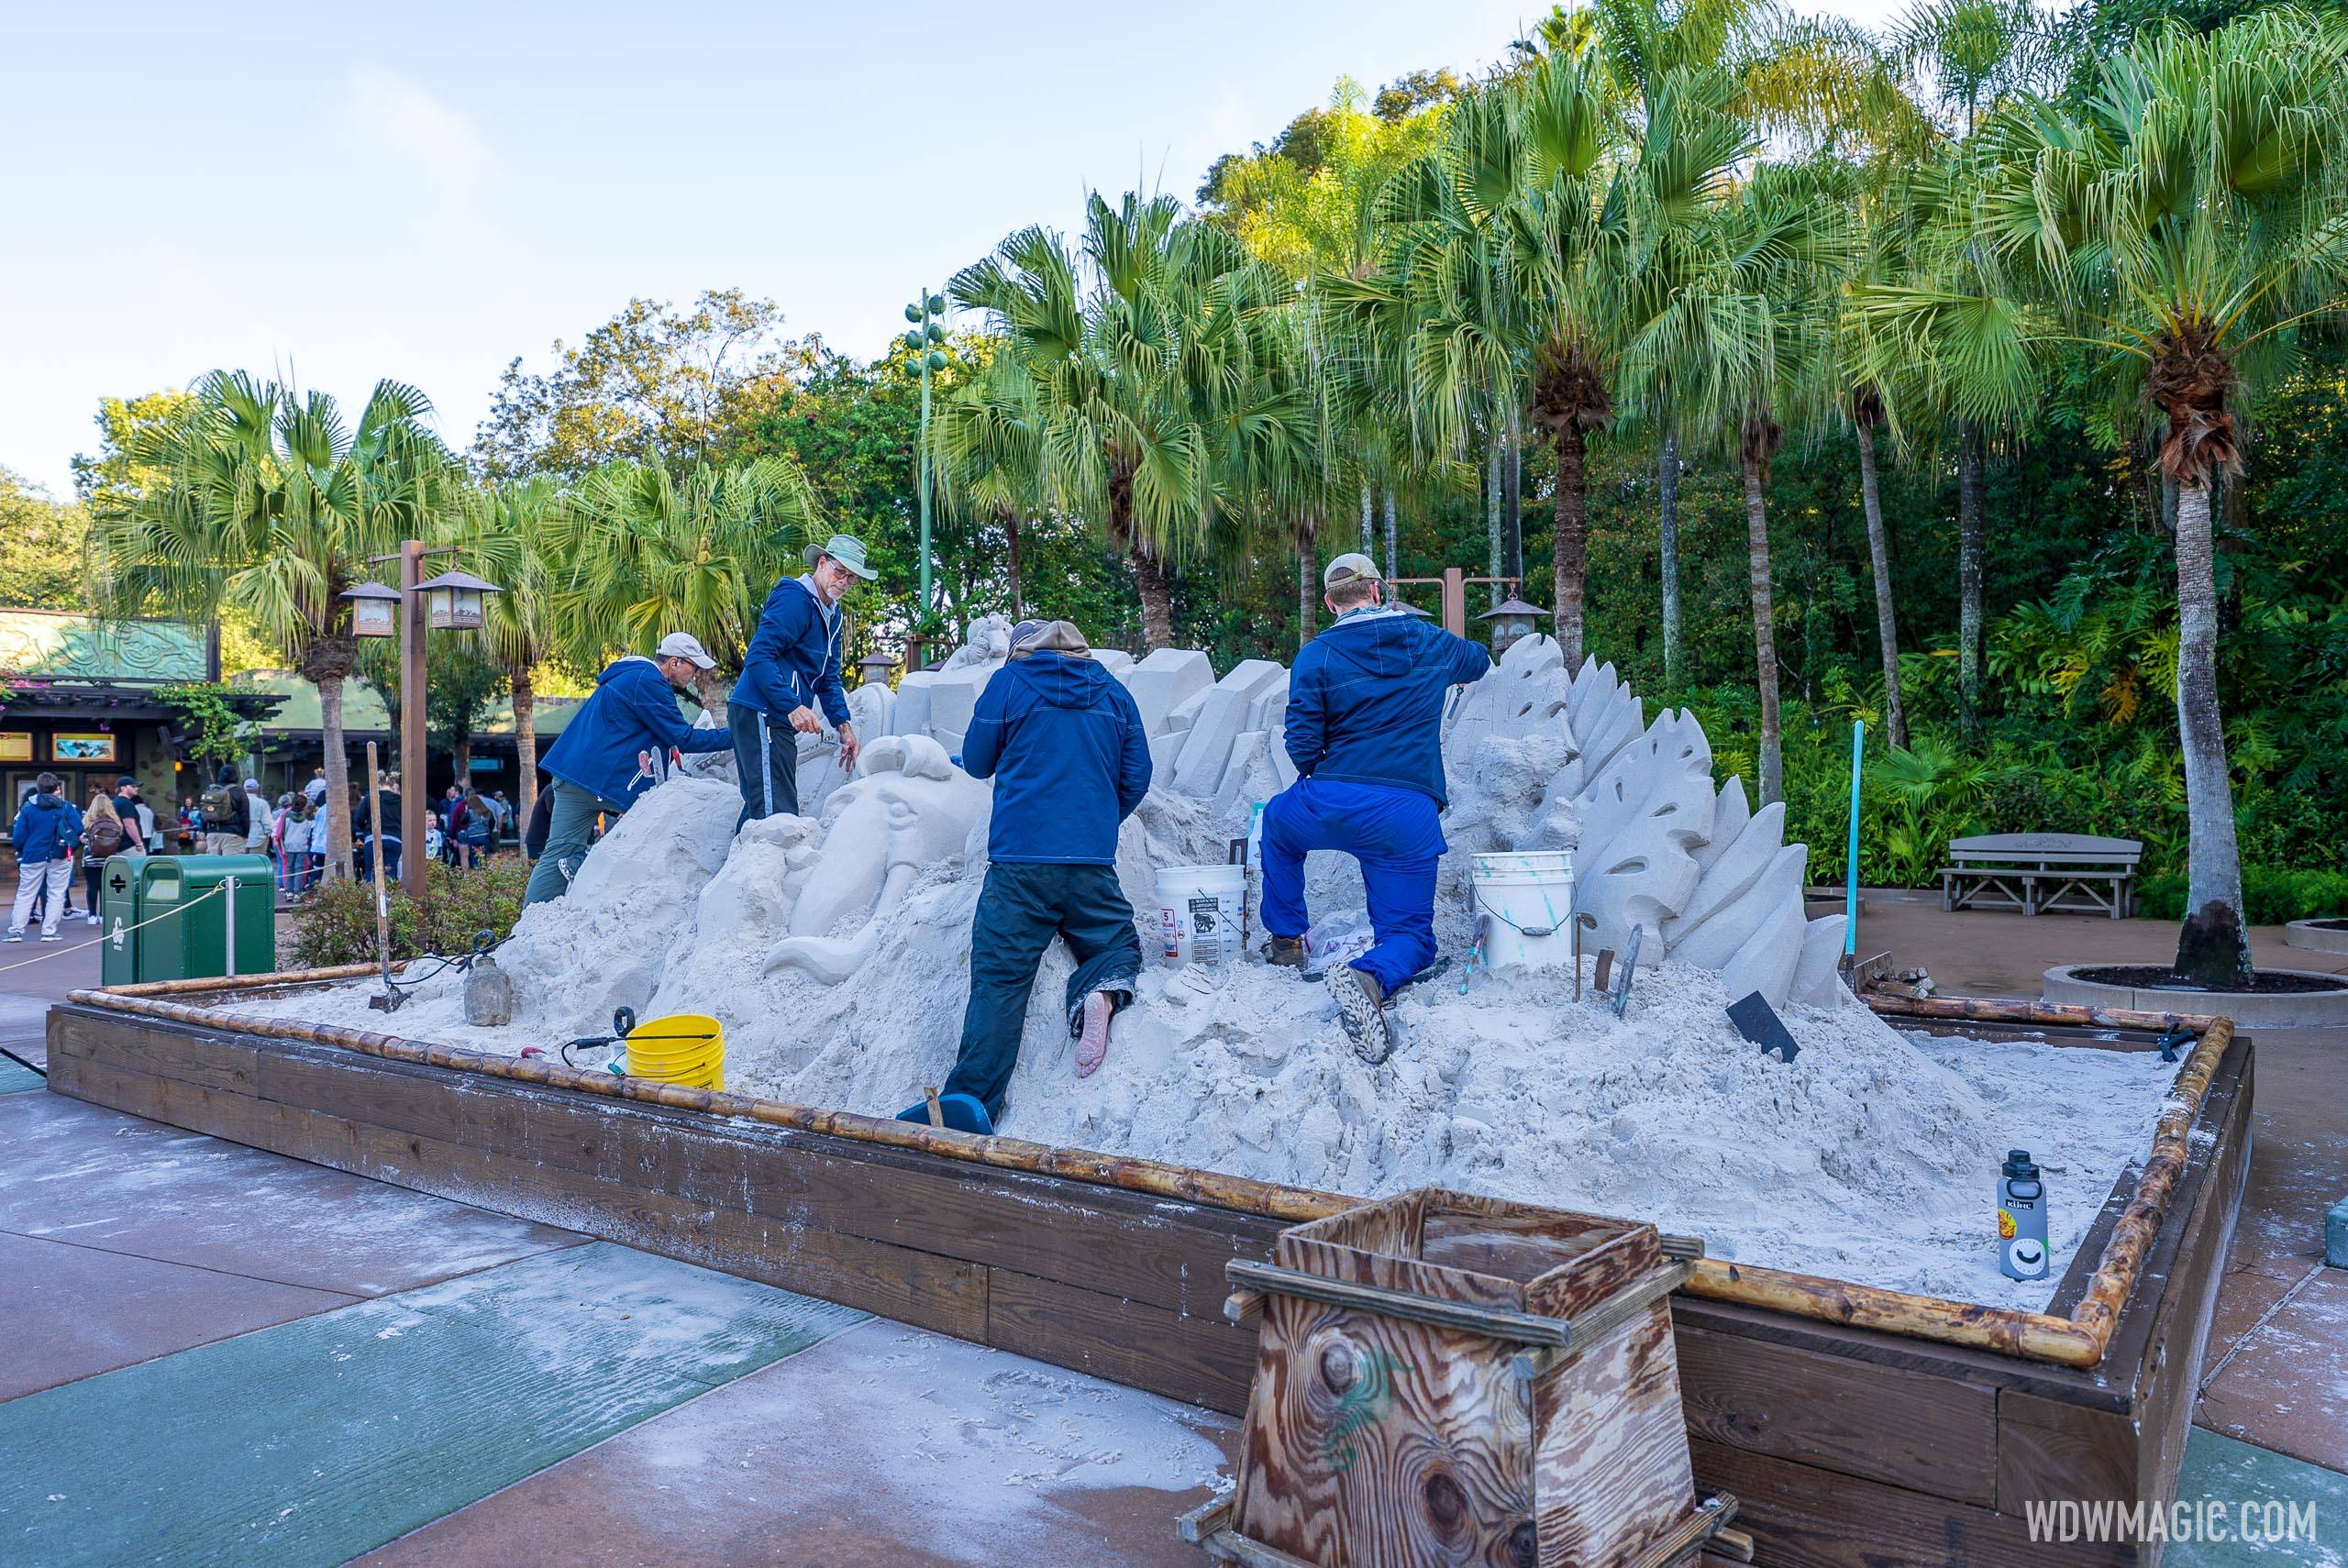 New 'Ice Age' sand sculpture being built at Disney's Animal Kingdom celebrating new Disney+ original